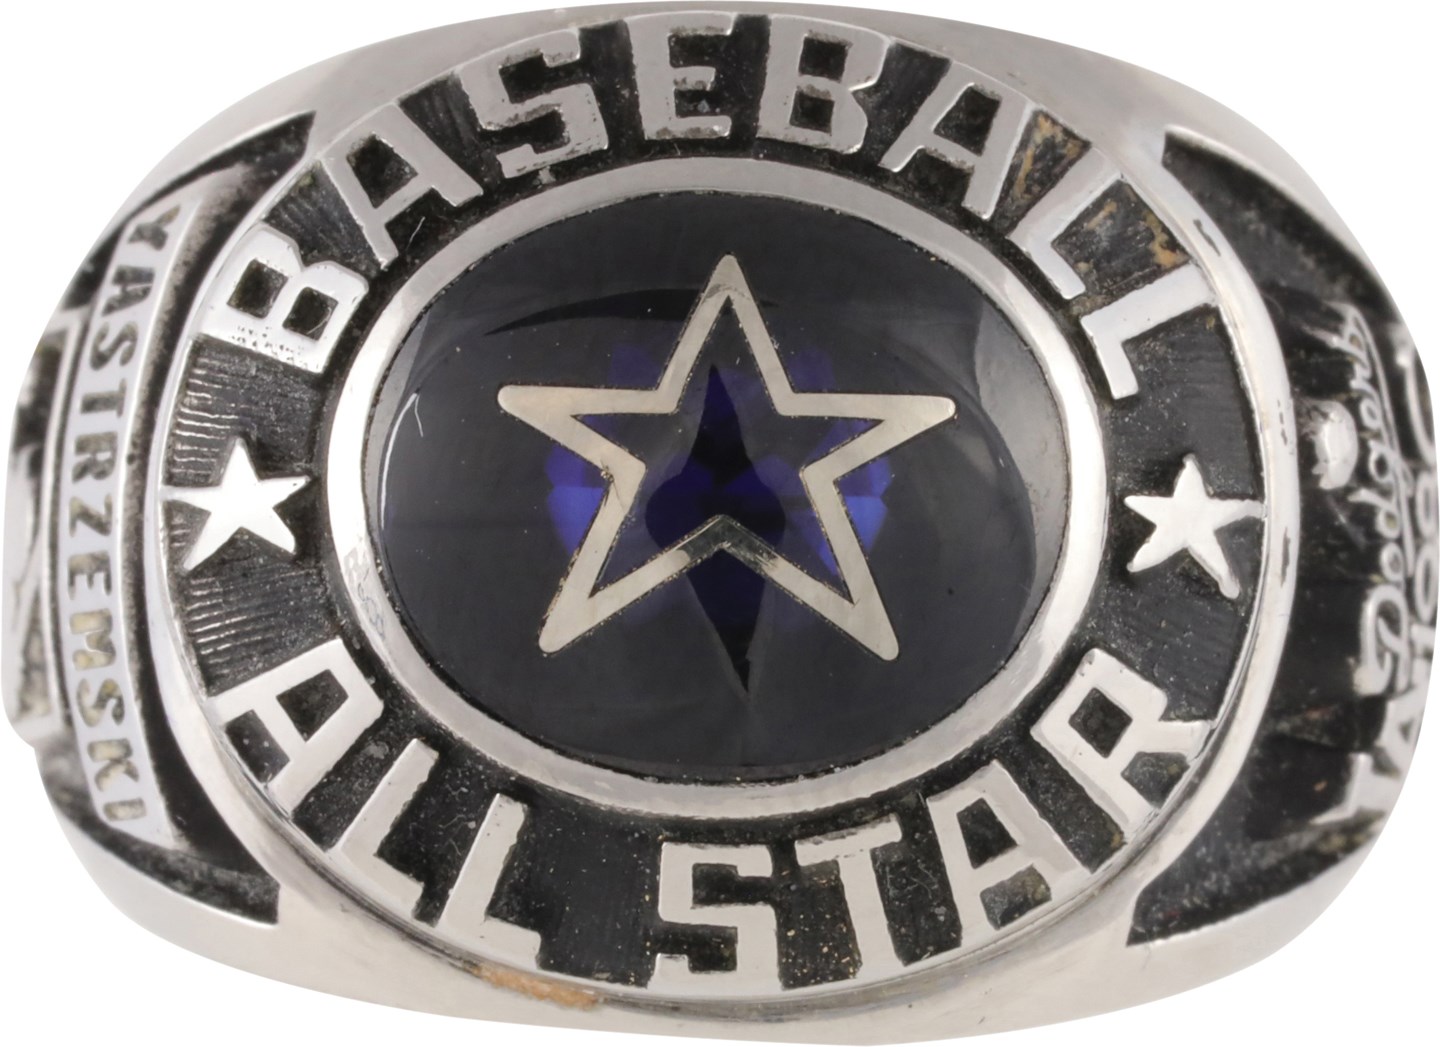 Sports Rings And Awards - 1980 MLB All-Star Game Ring - "Yastrzemski"